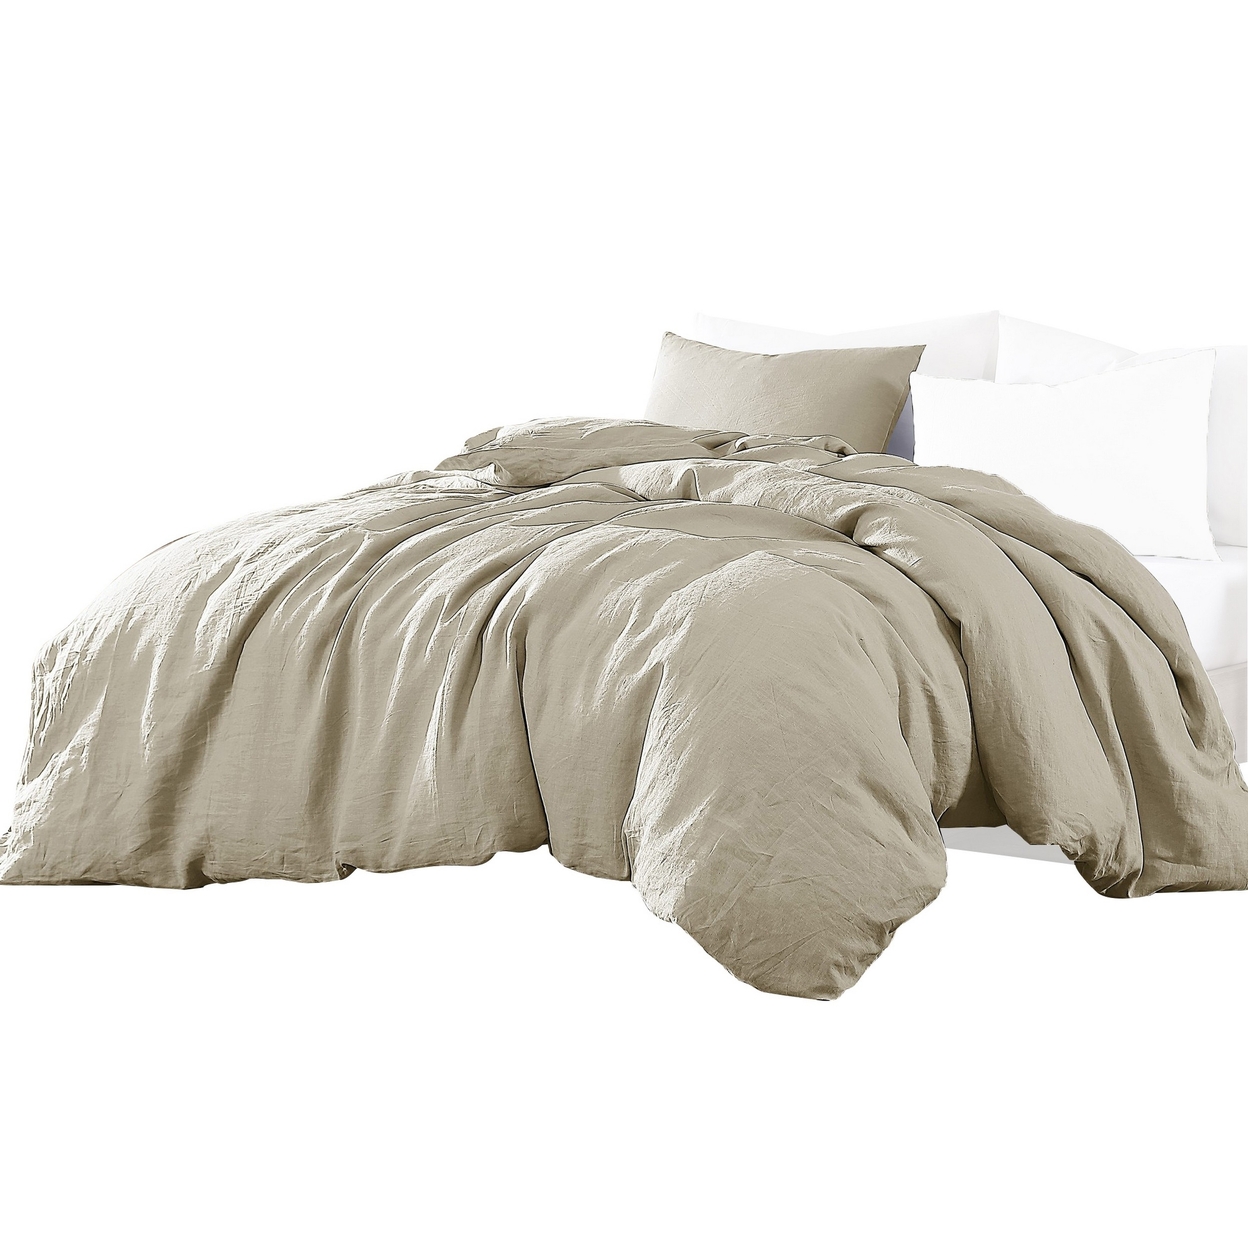 Edge 3 Piece Twin Size Duvet Comforter Set, Washed Linen, Oatmeal Beige - Saltoro Sherpi